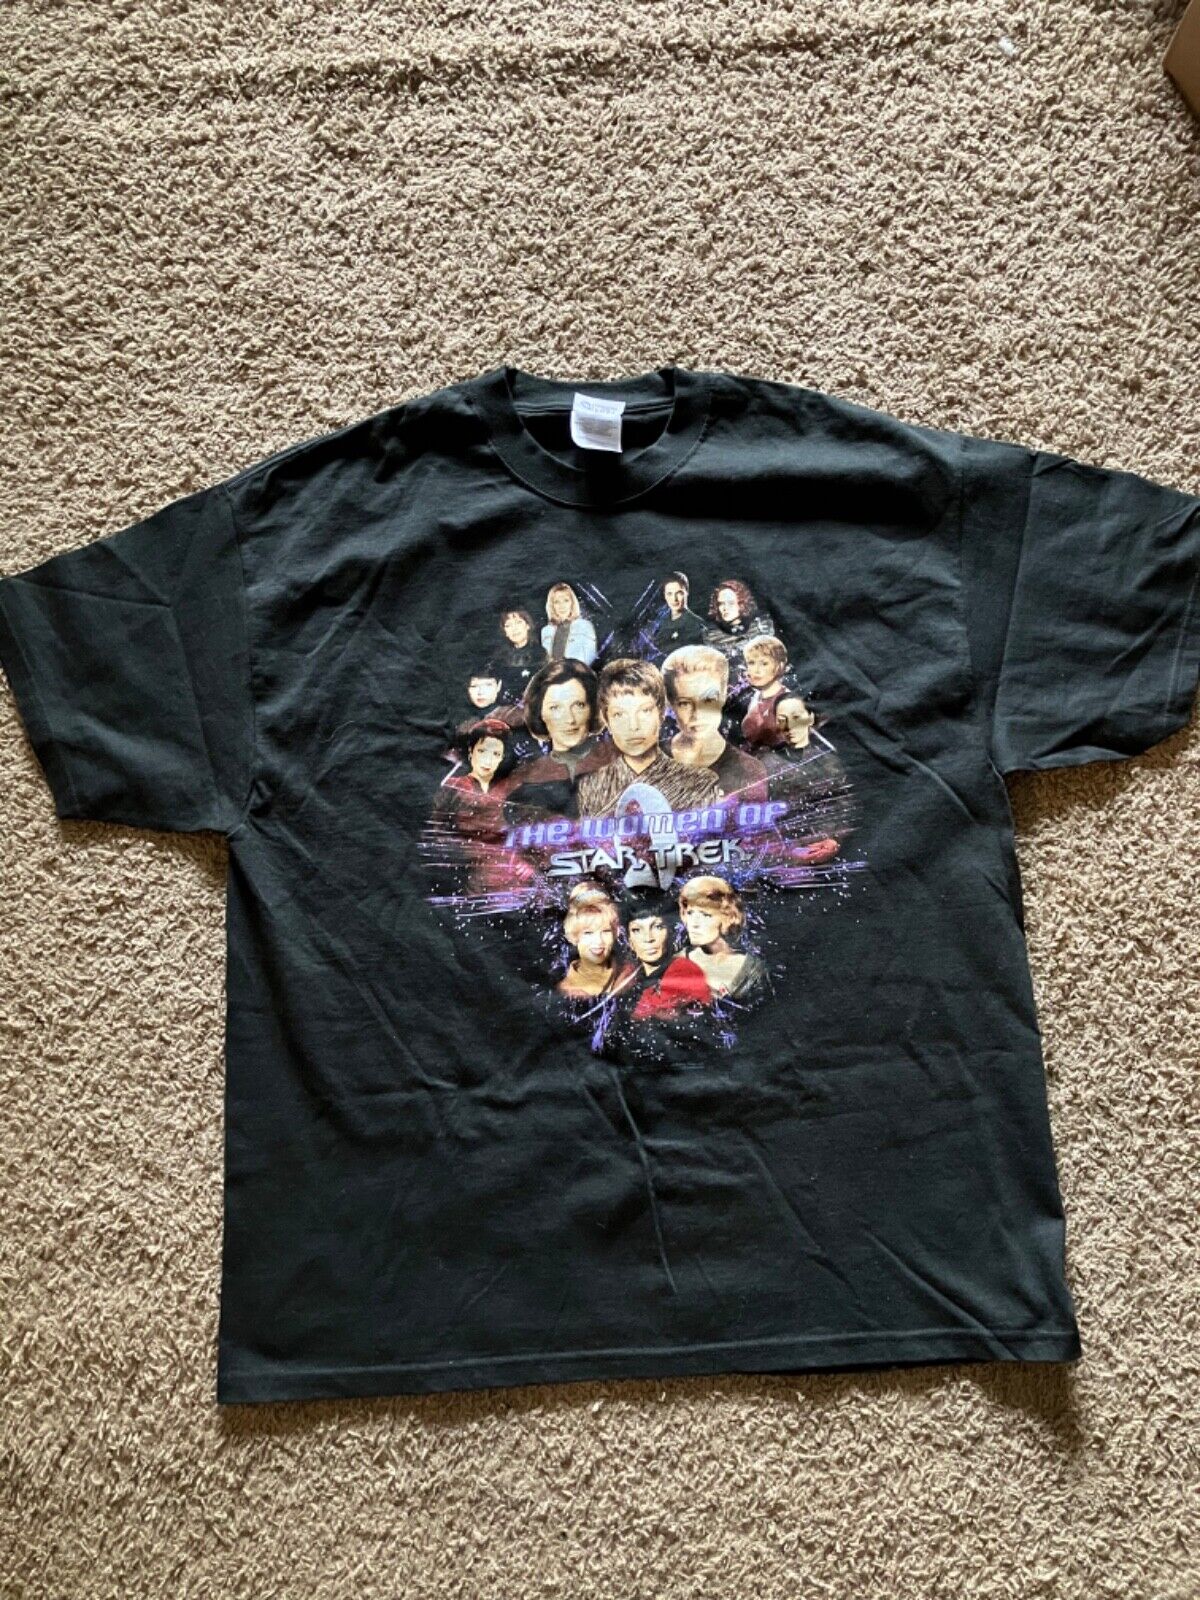 Rare Vintage The Women of Star Trek 2003 T Shirt TV Show Promo Black Size XL